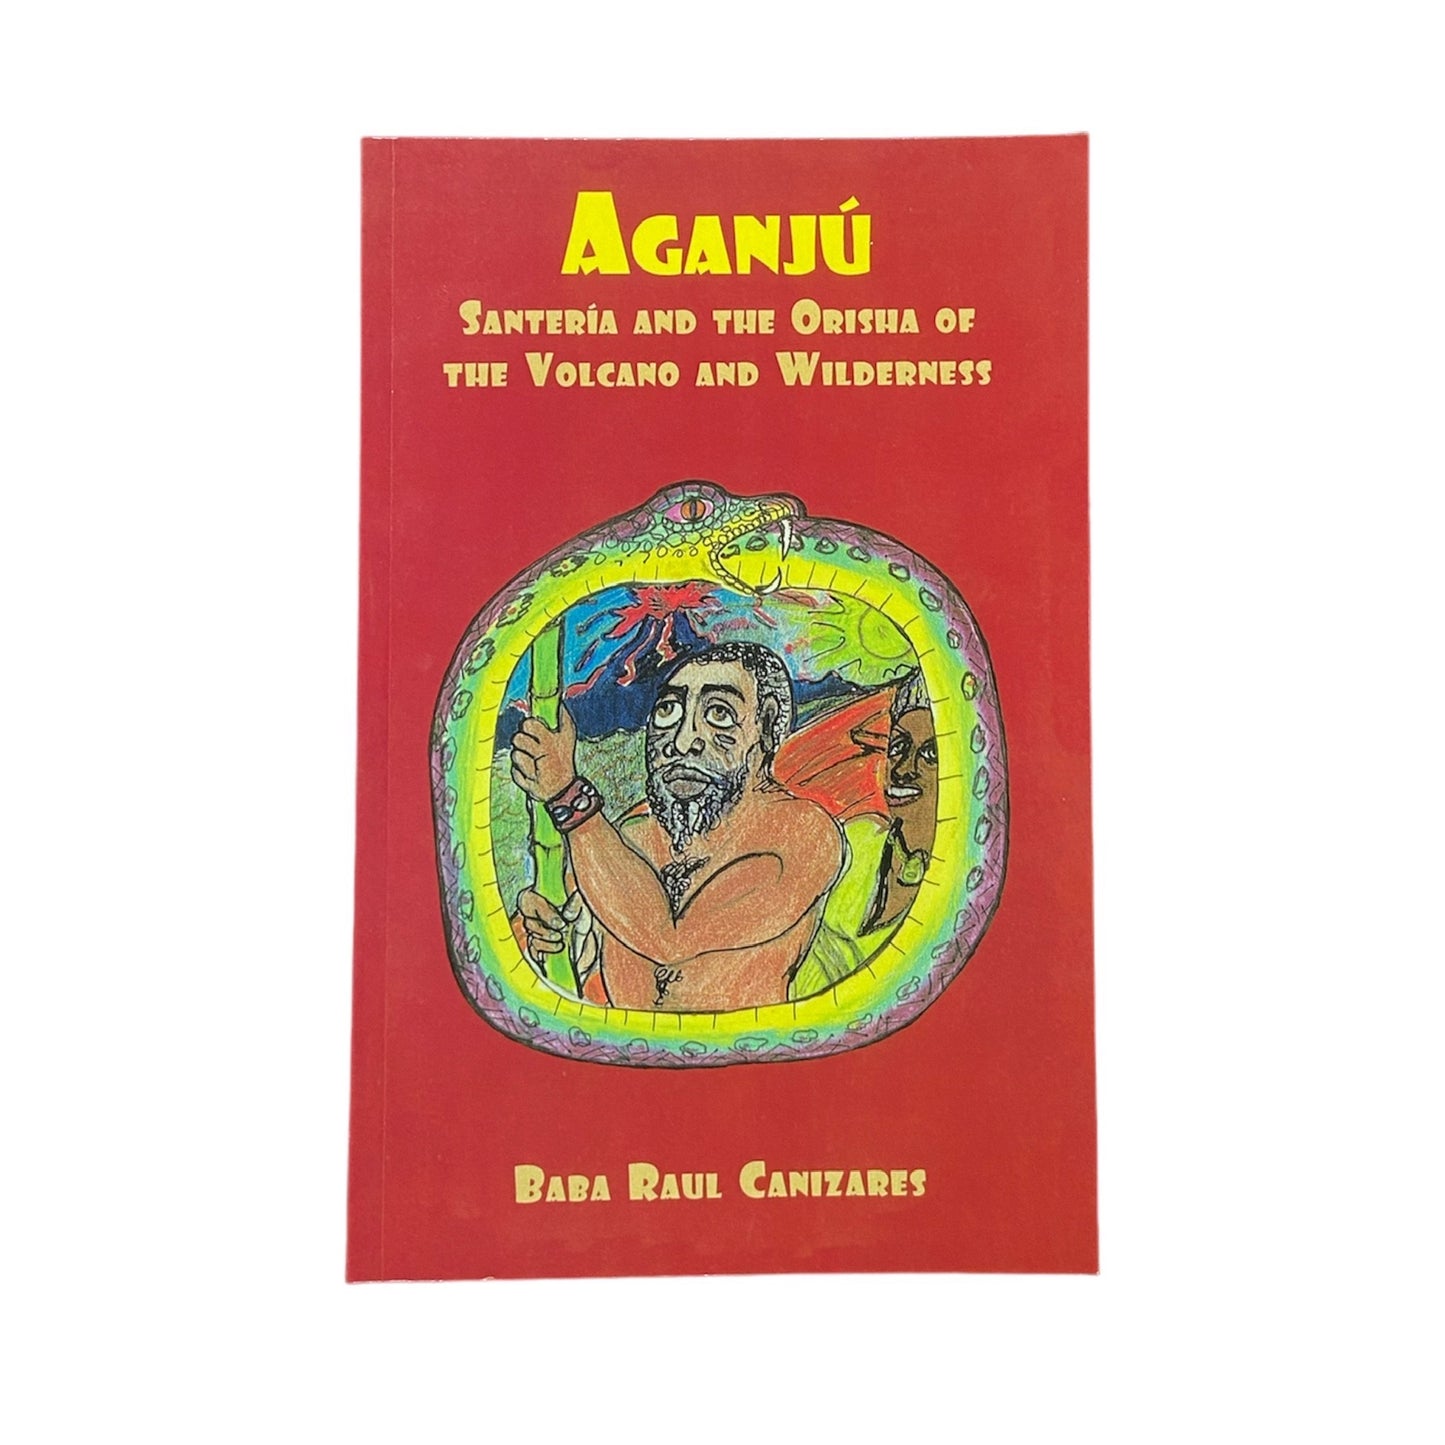 Aganjú: Santería and the Orisha of the Volcano and Wilderness by Baba Raul Canizares